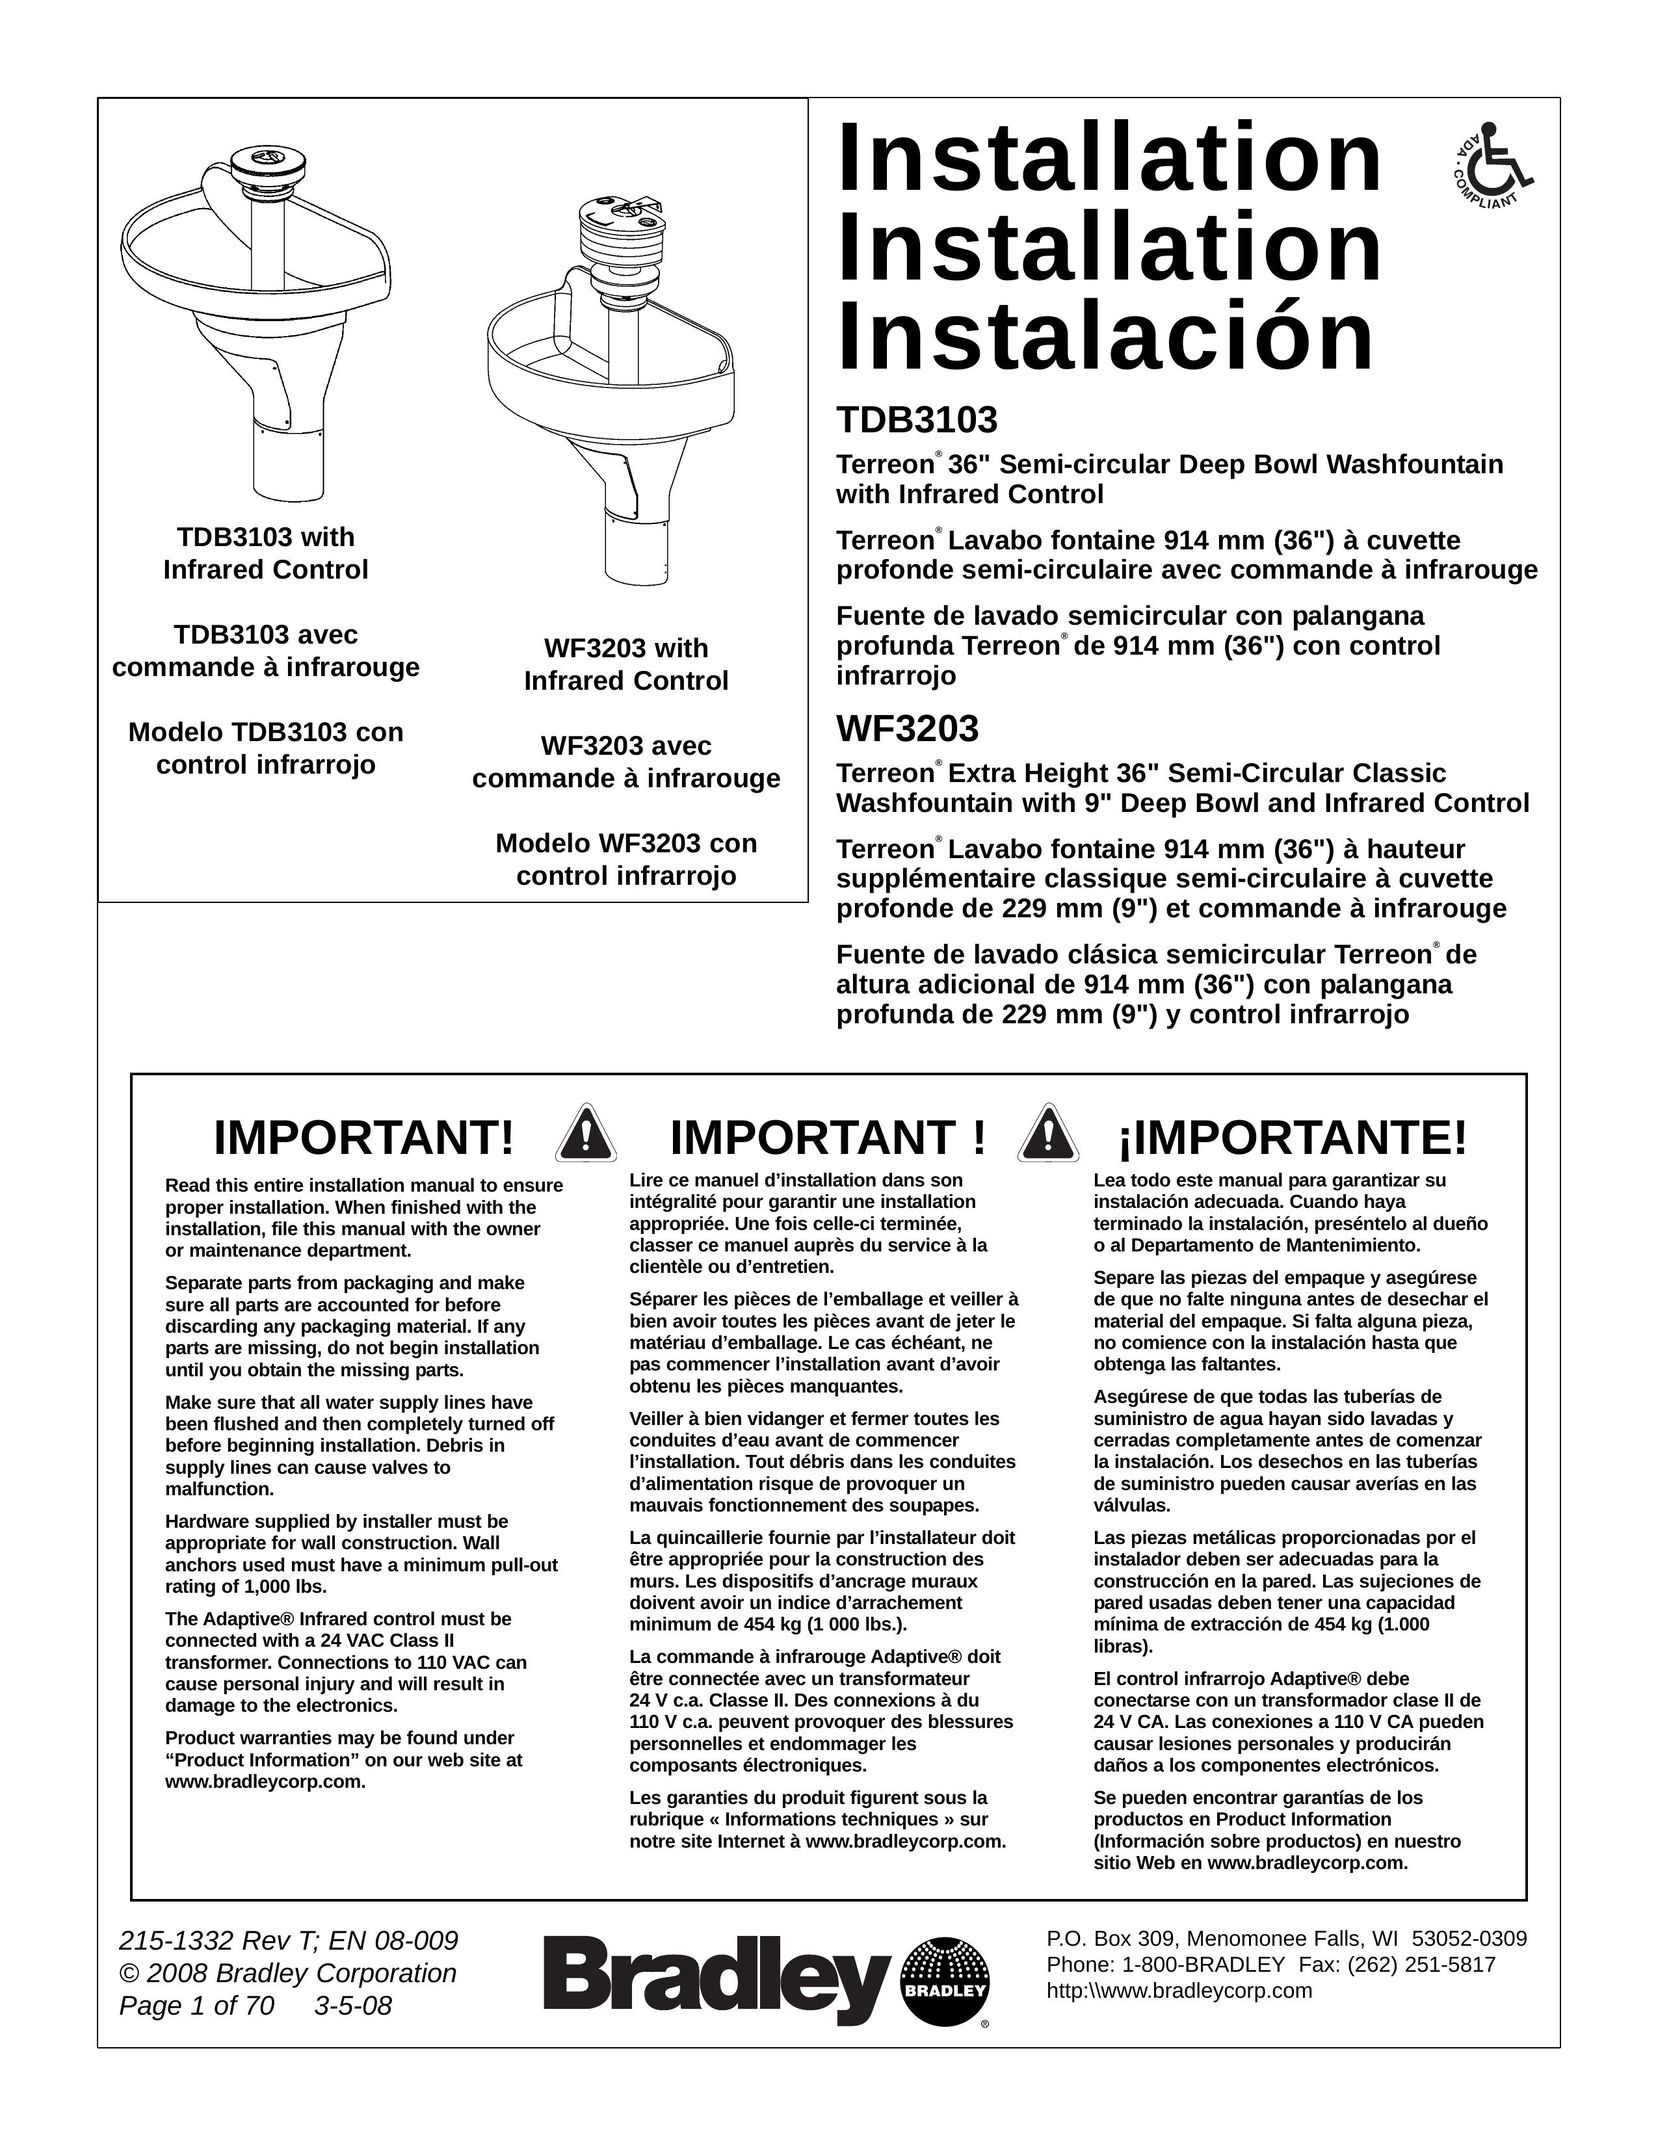 Bradley Brand Furniture TBD3103 Plumbing Product User Manual